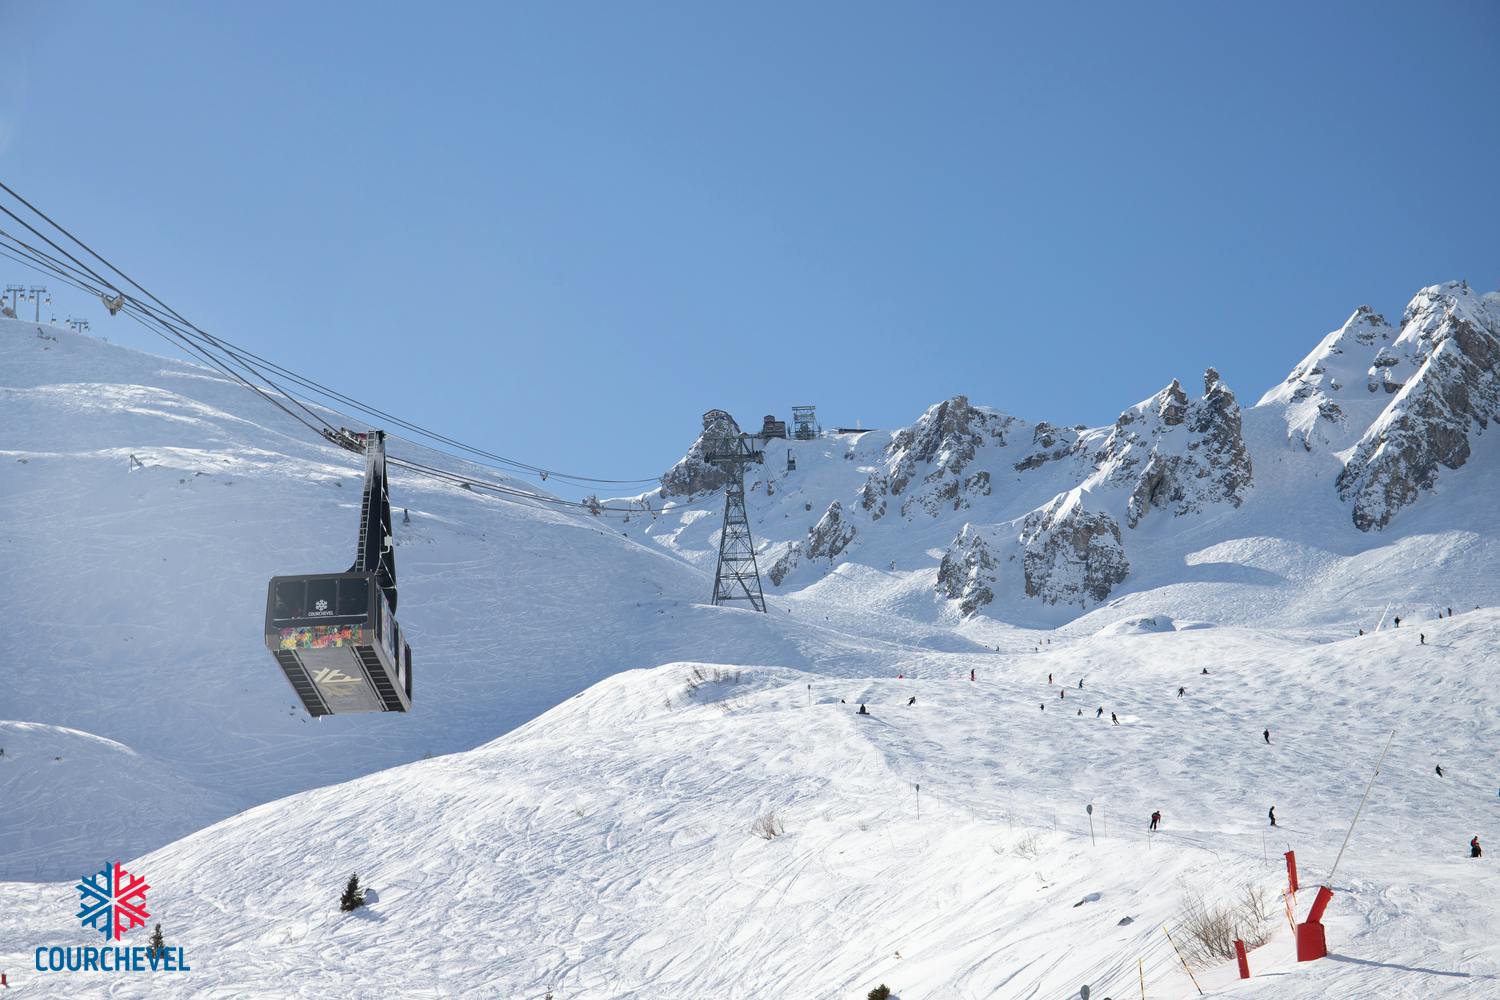 Gondola taking skiiers to top of french alps mountain